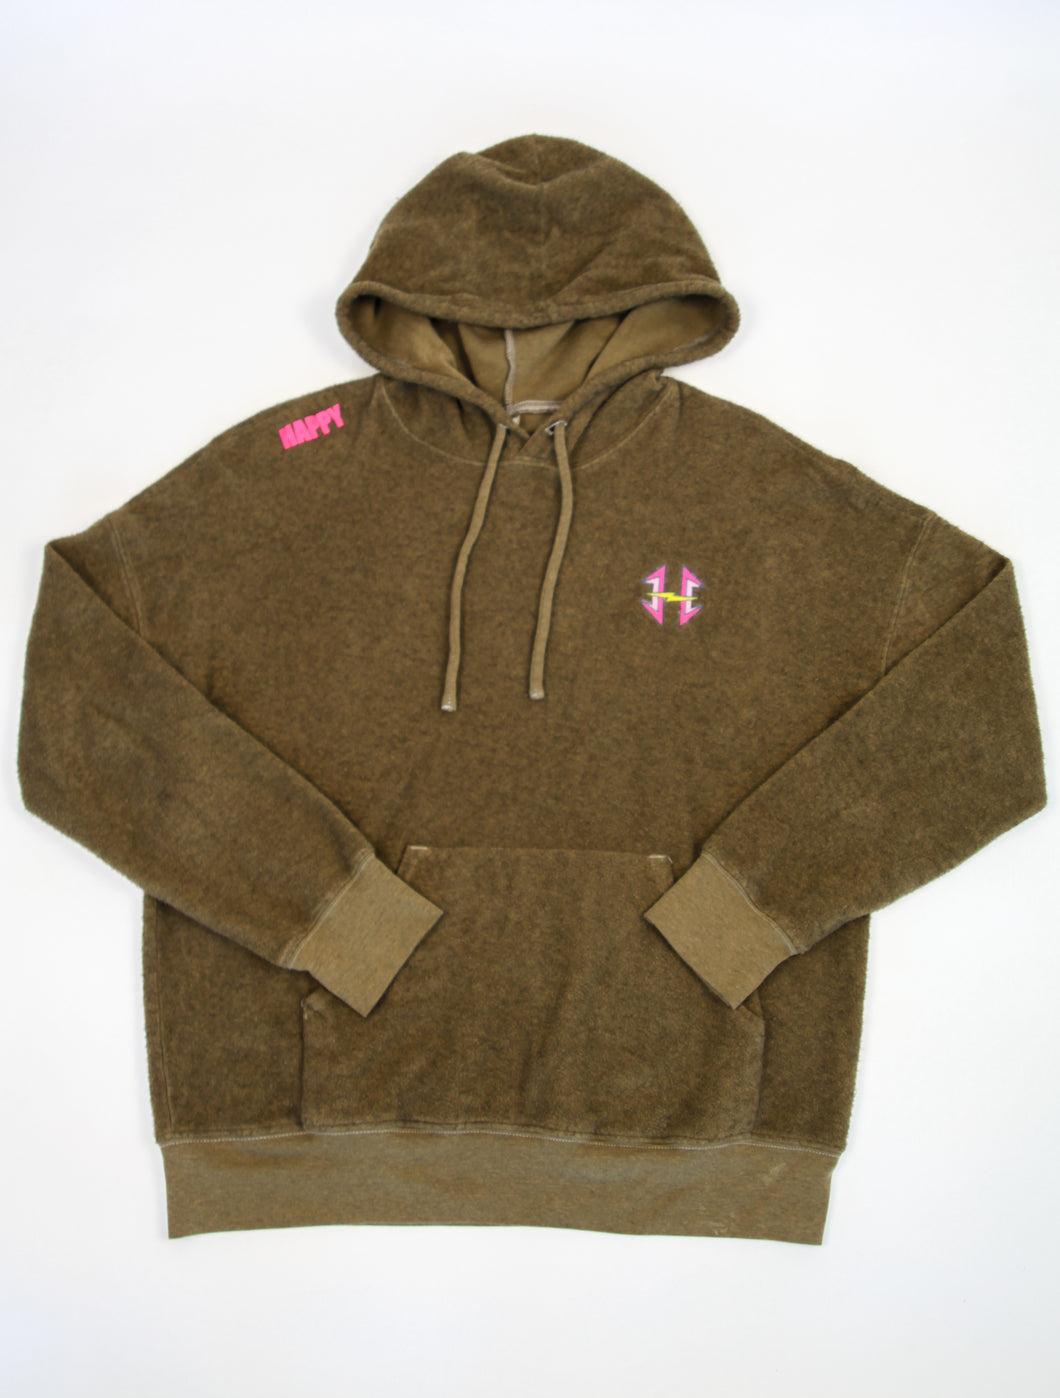 Vintage military embroidered 'H' logo fleece Hoody